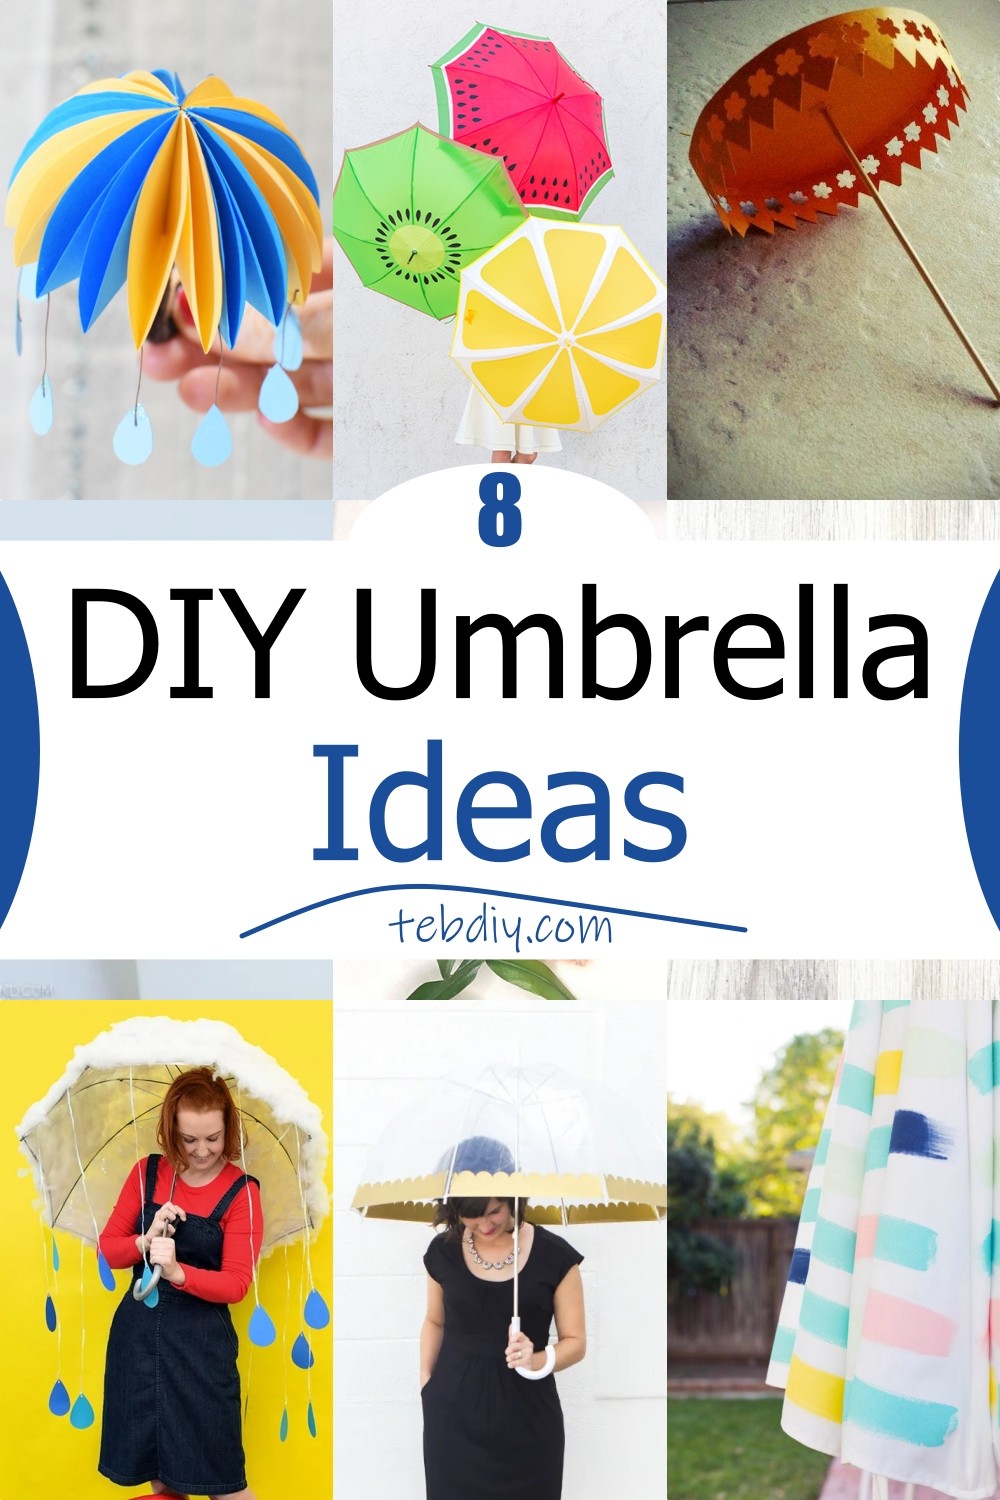 DIY Umbrella Ideas